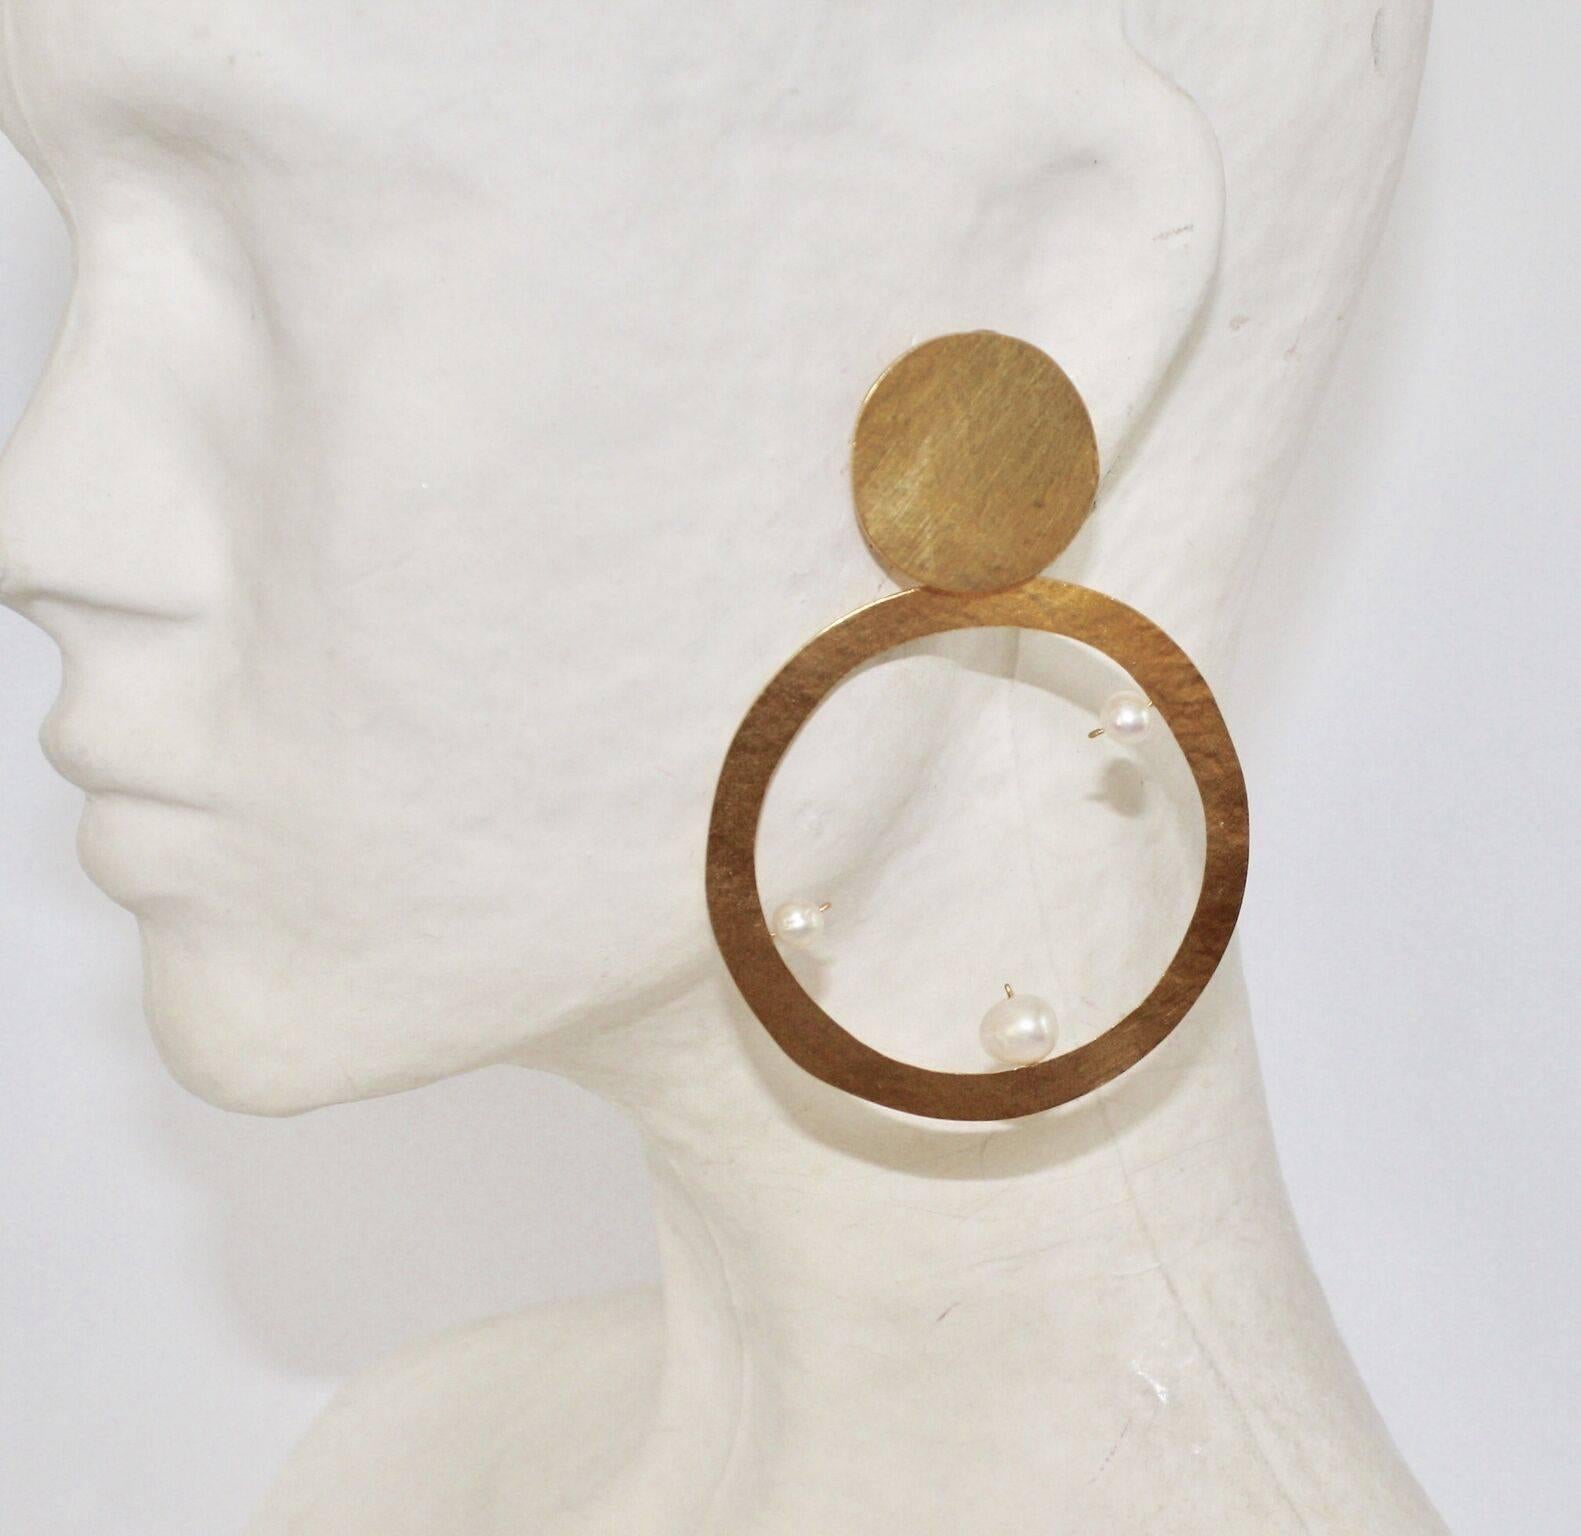 Gilded brass clip earrings with pearl detailing from Herve van der Straeten. 

3.5